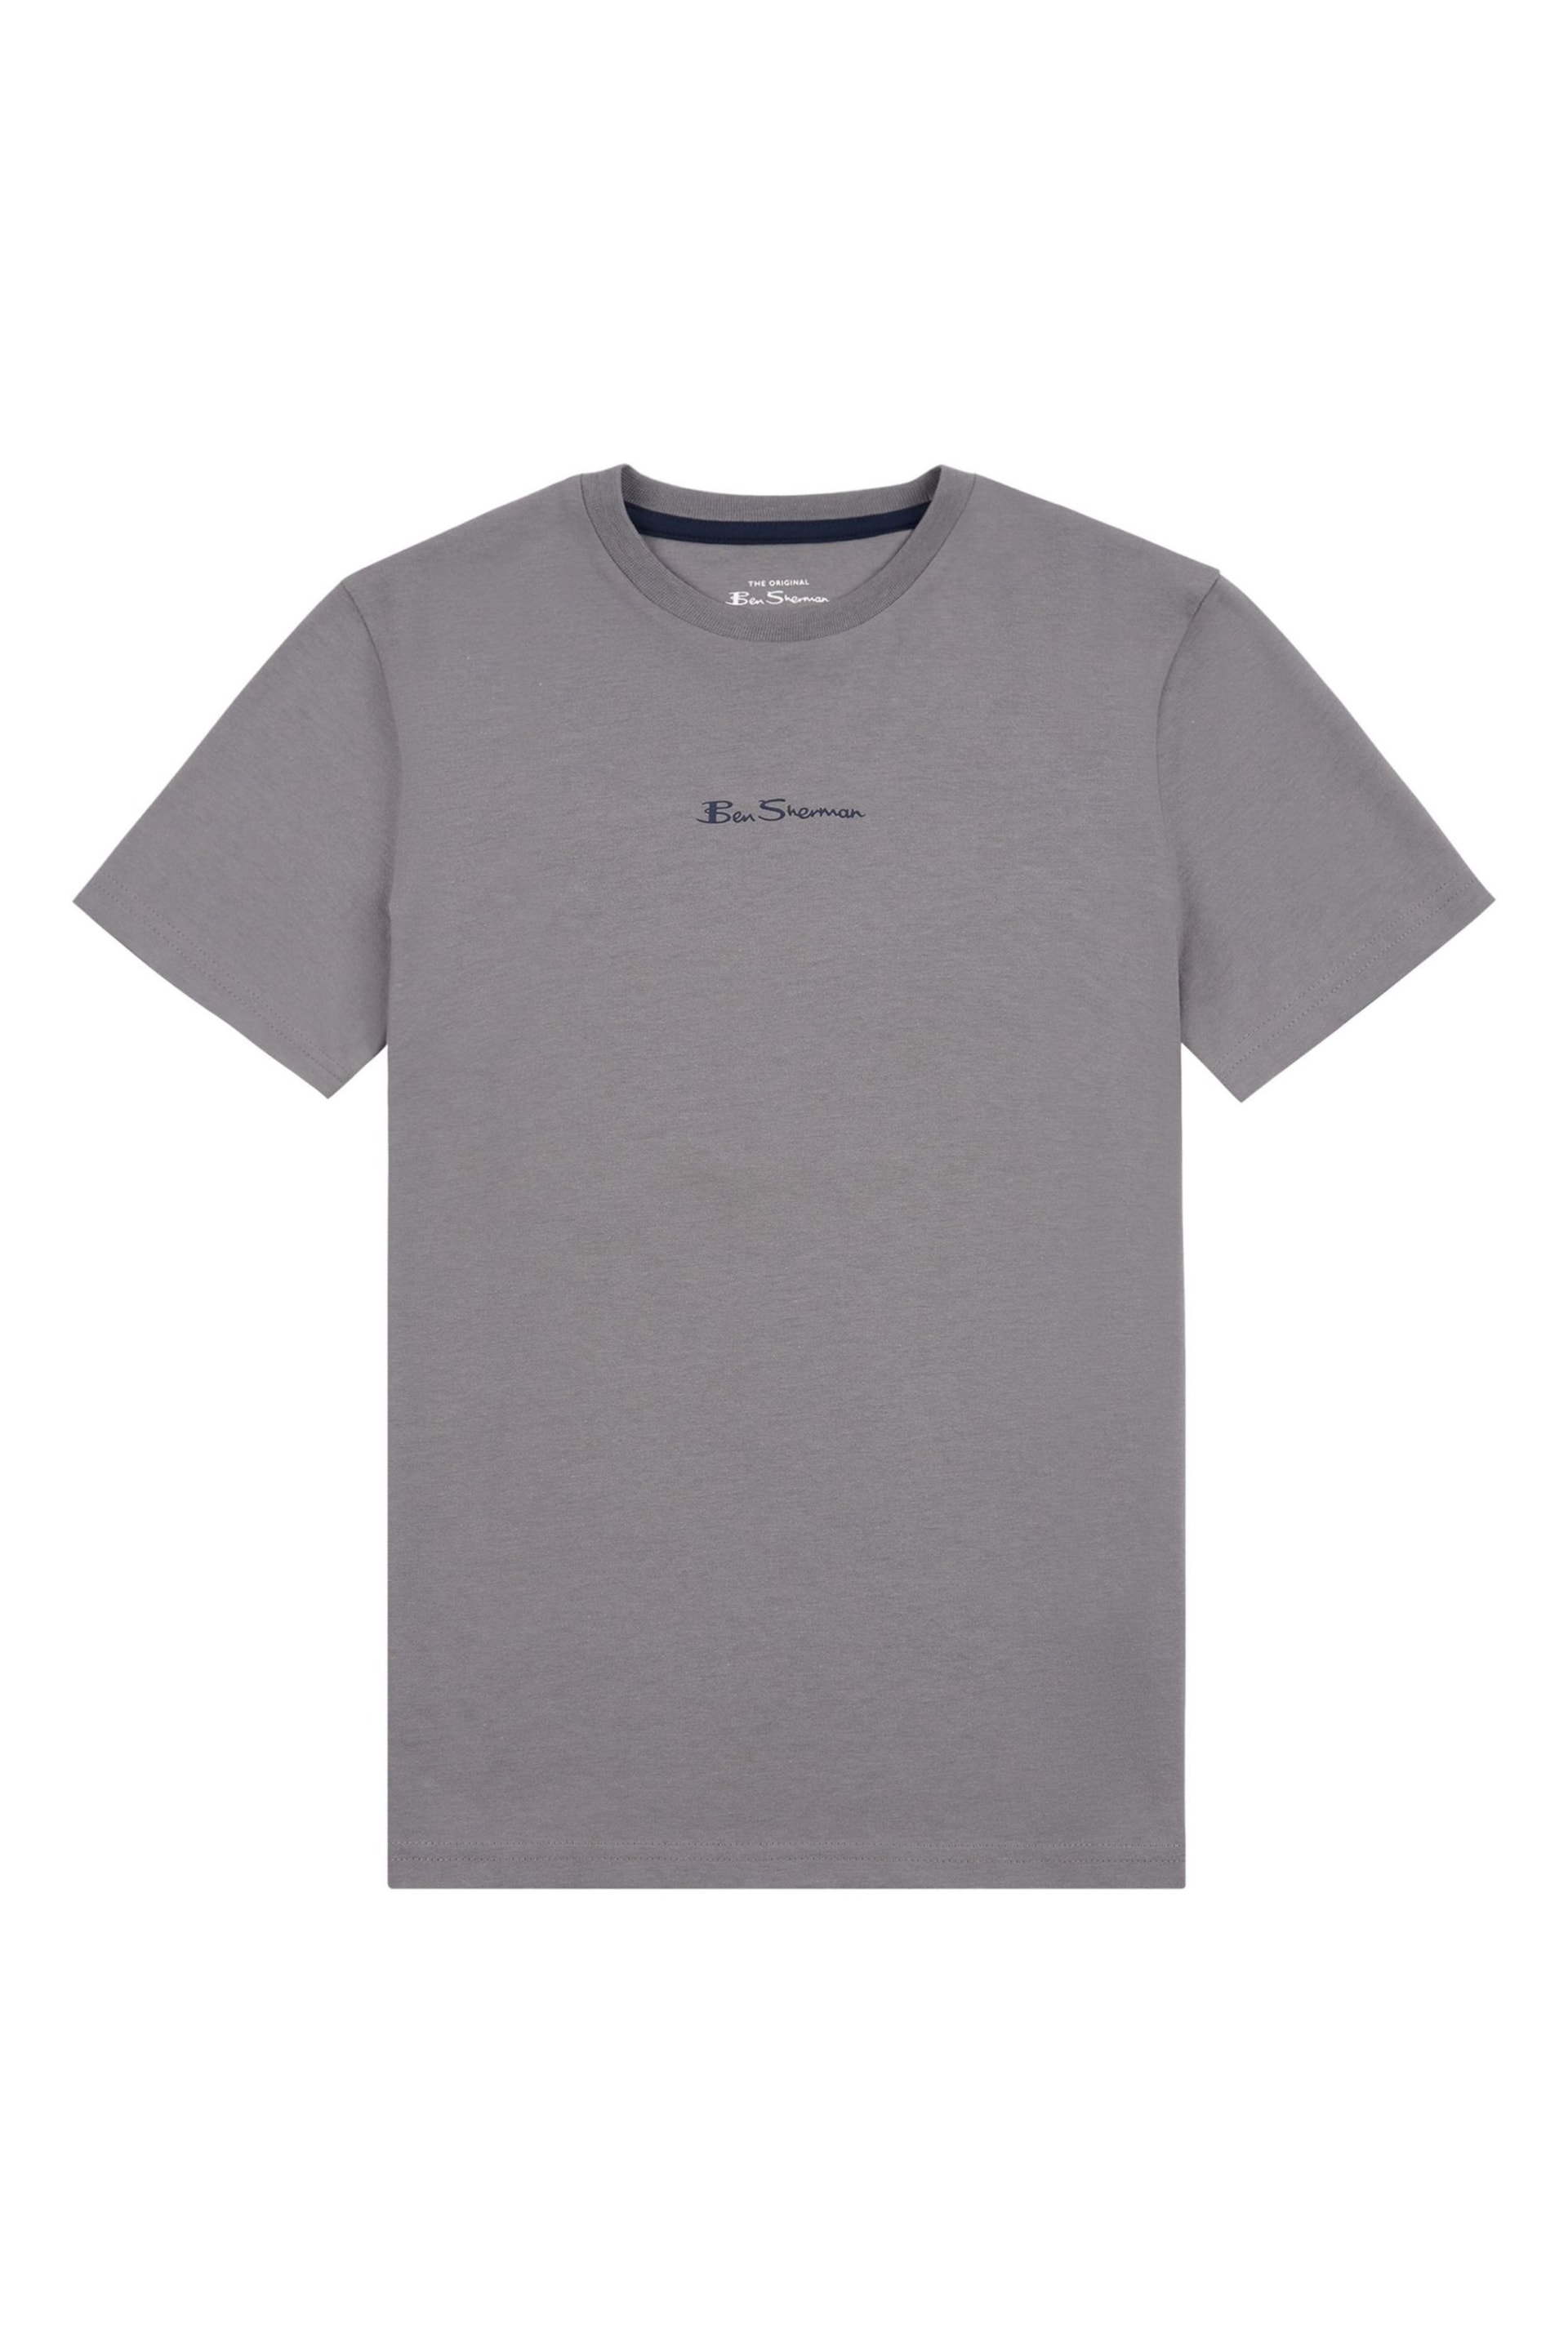 Ben Sherman Boys Blue Centre Script T-Shirt - Image 1 of 3